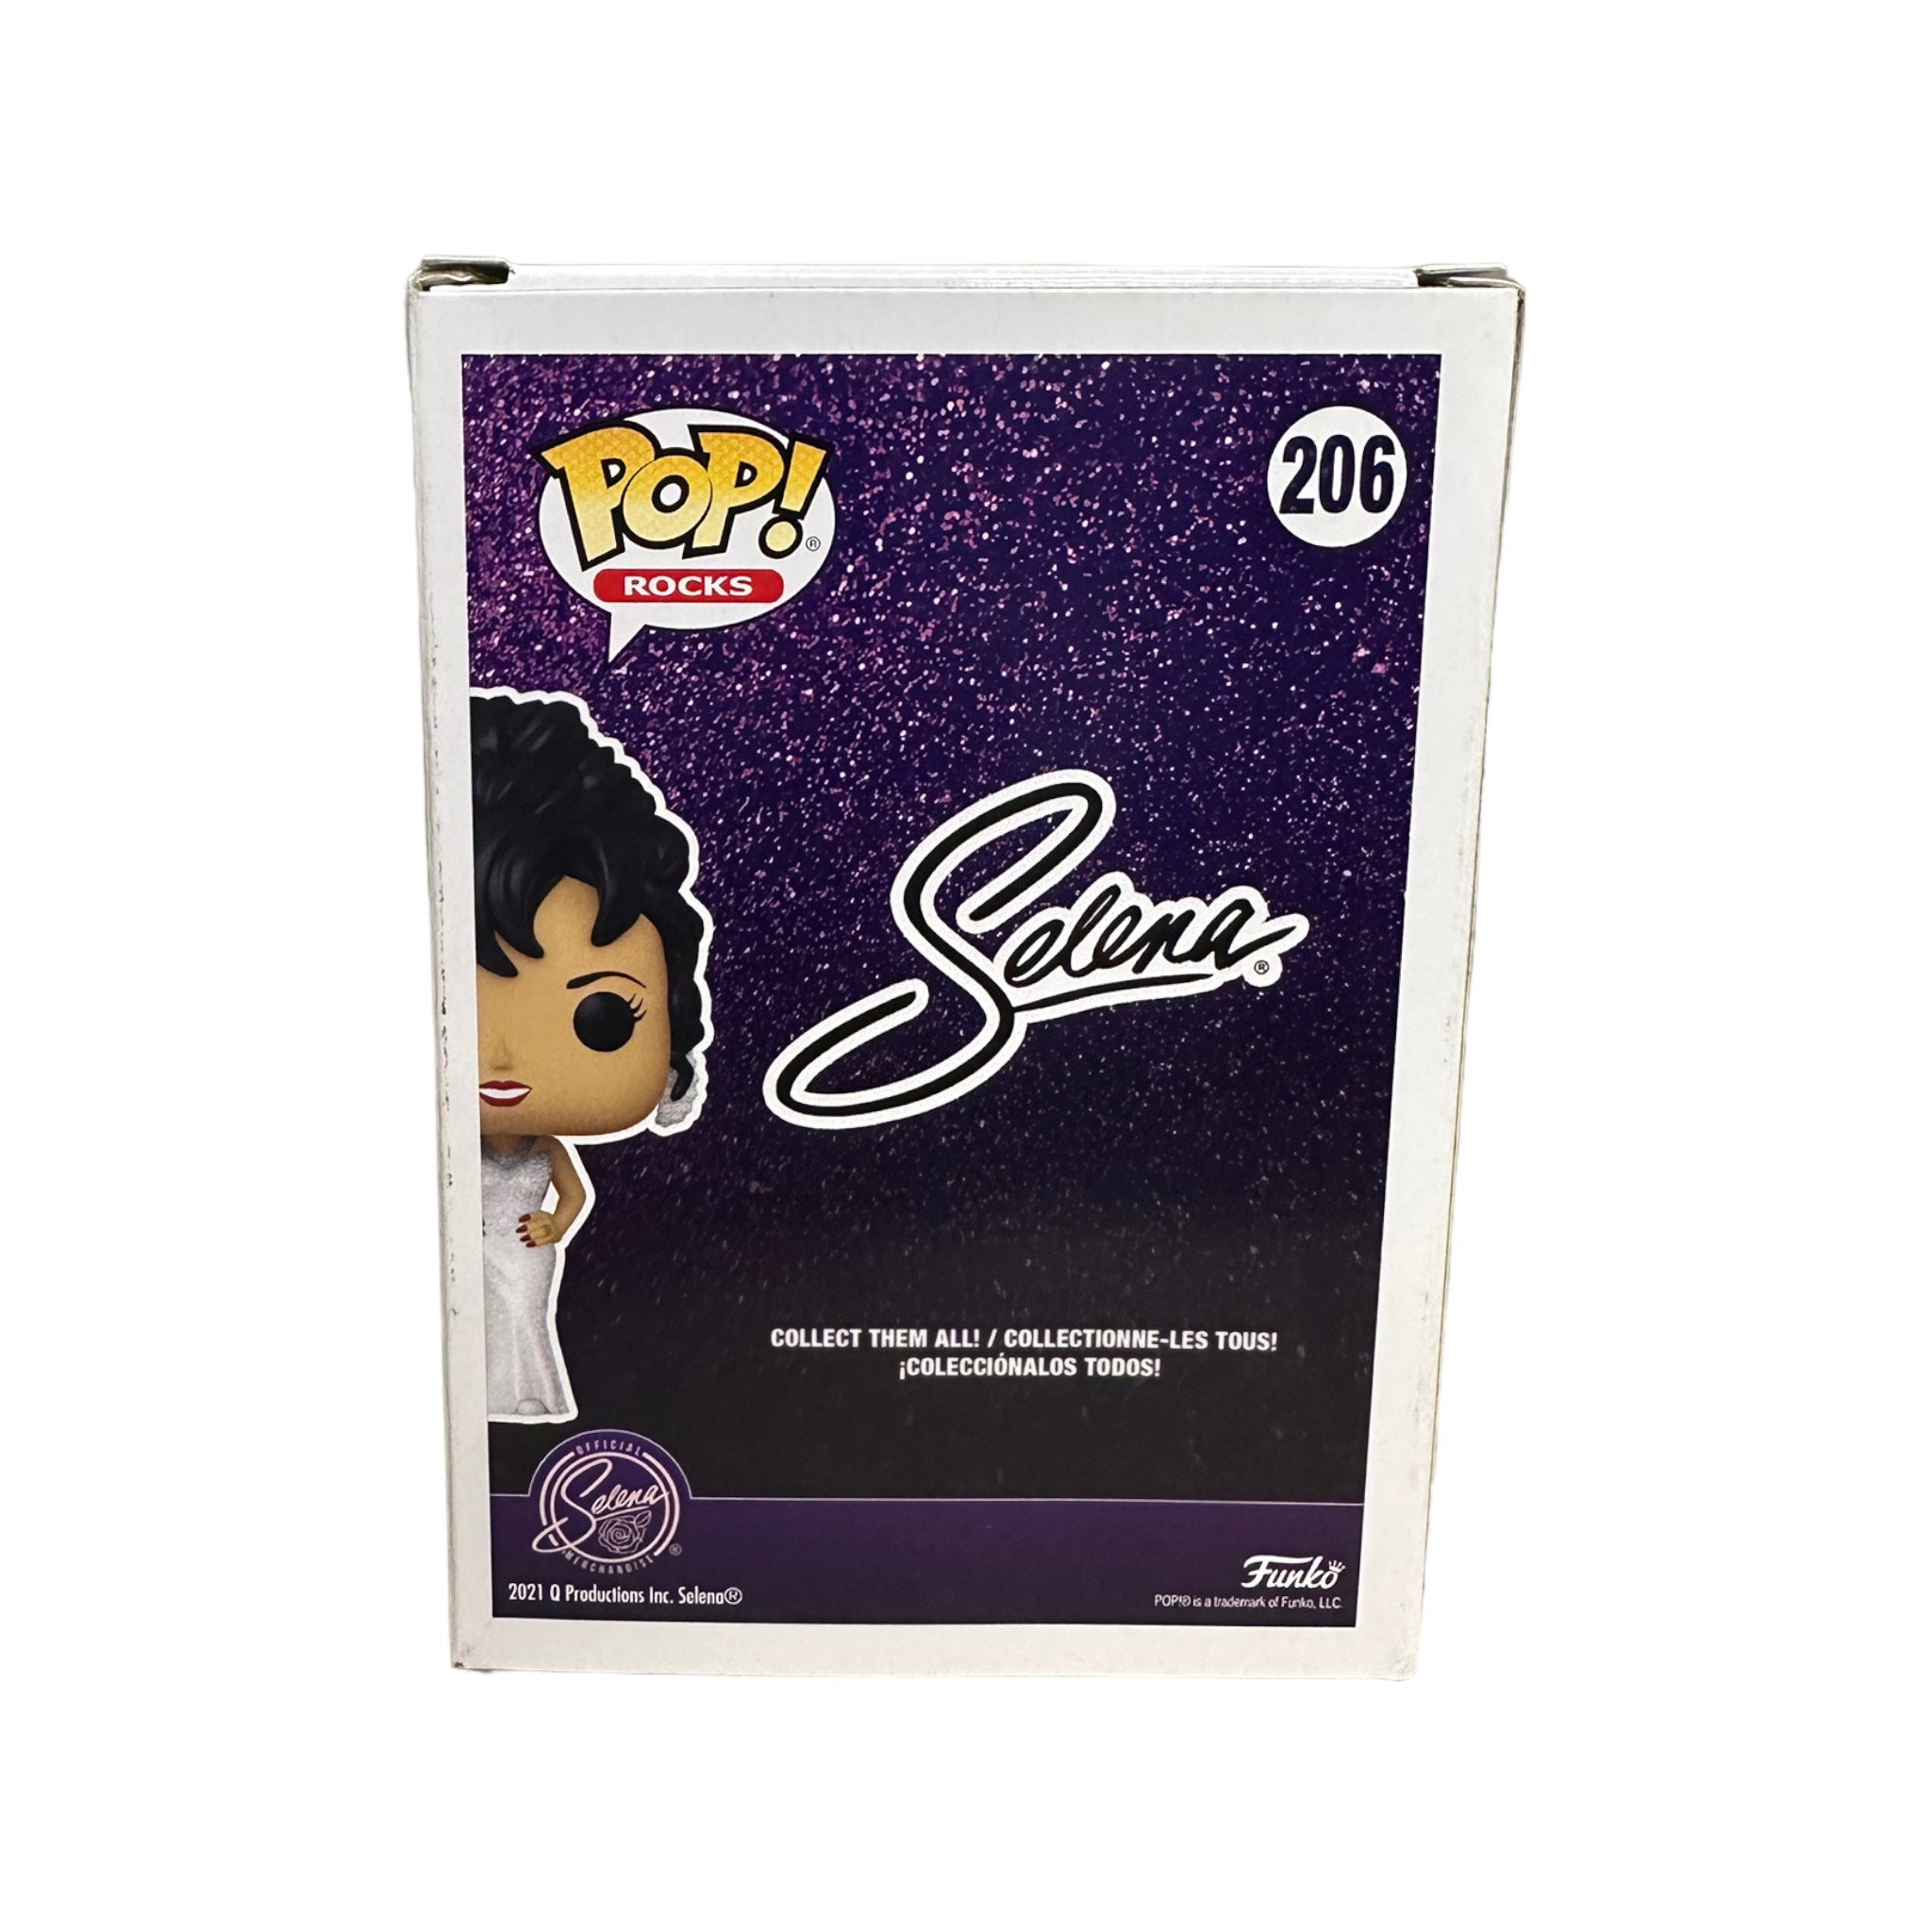 Selena #206 (Diamond Collection) Funko Pop! - Rocks - US Funko Shop Exclusive - Condition 9/10